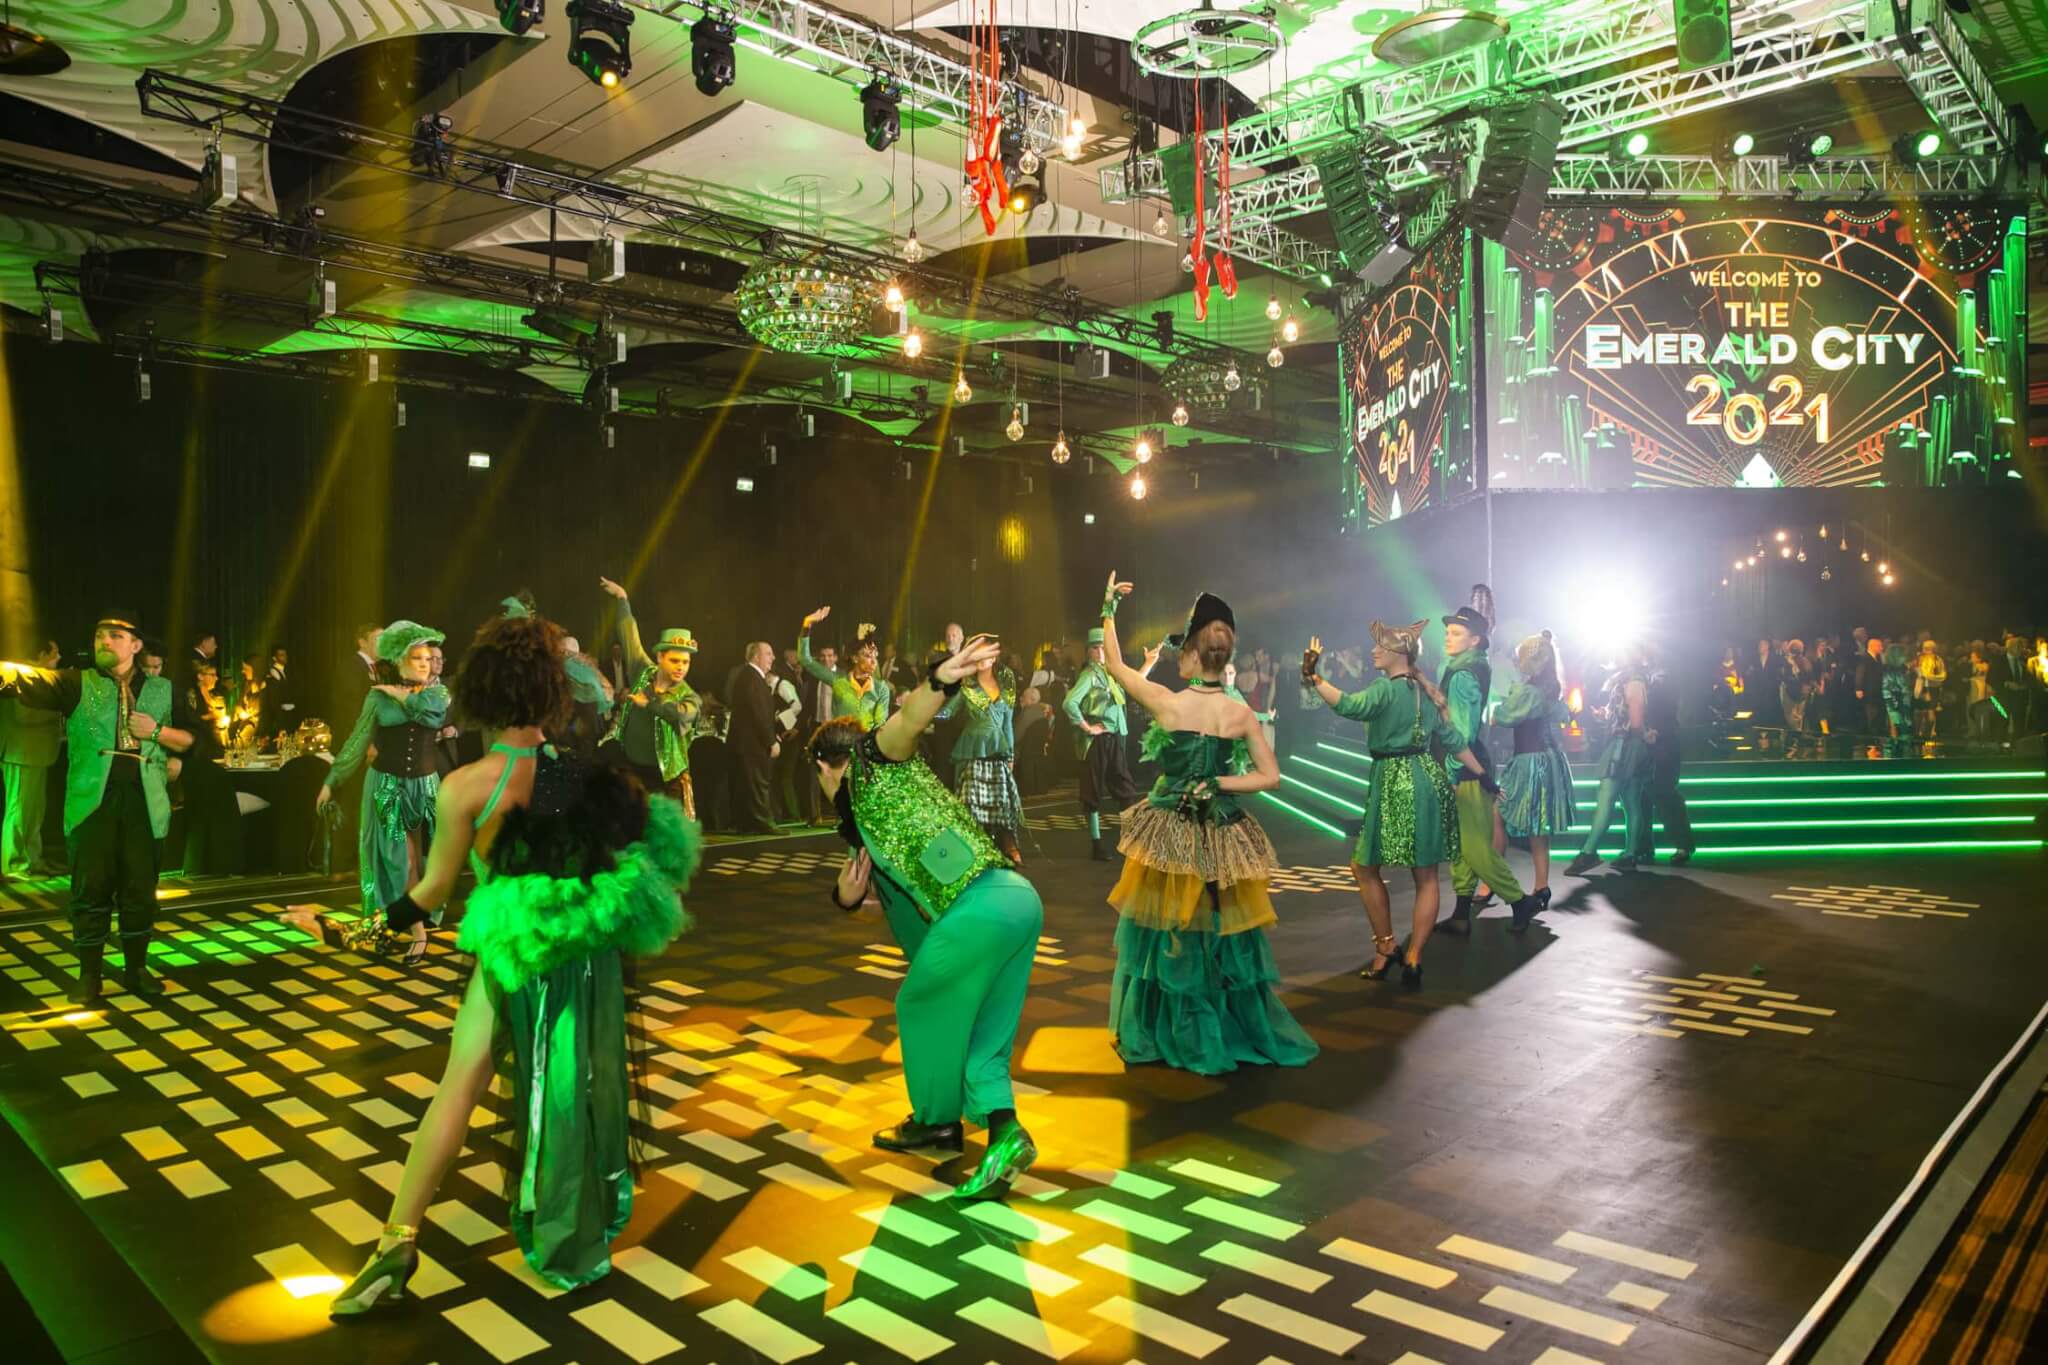 Emerald City Dancers